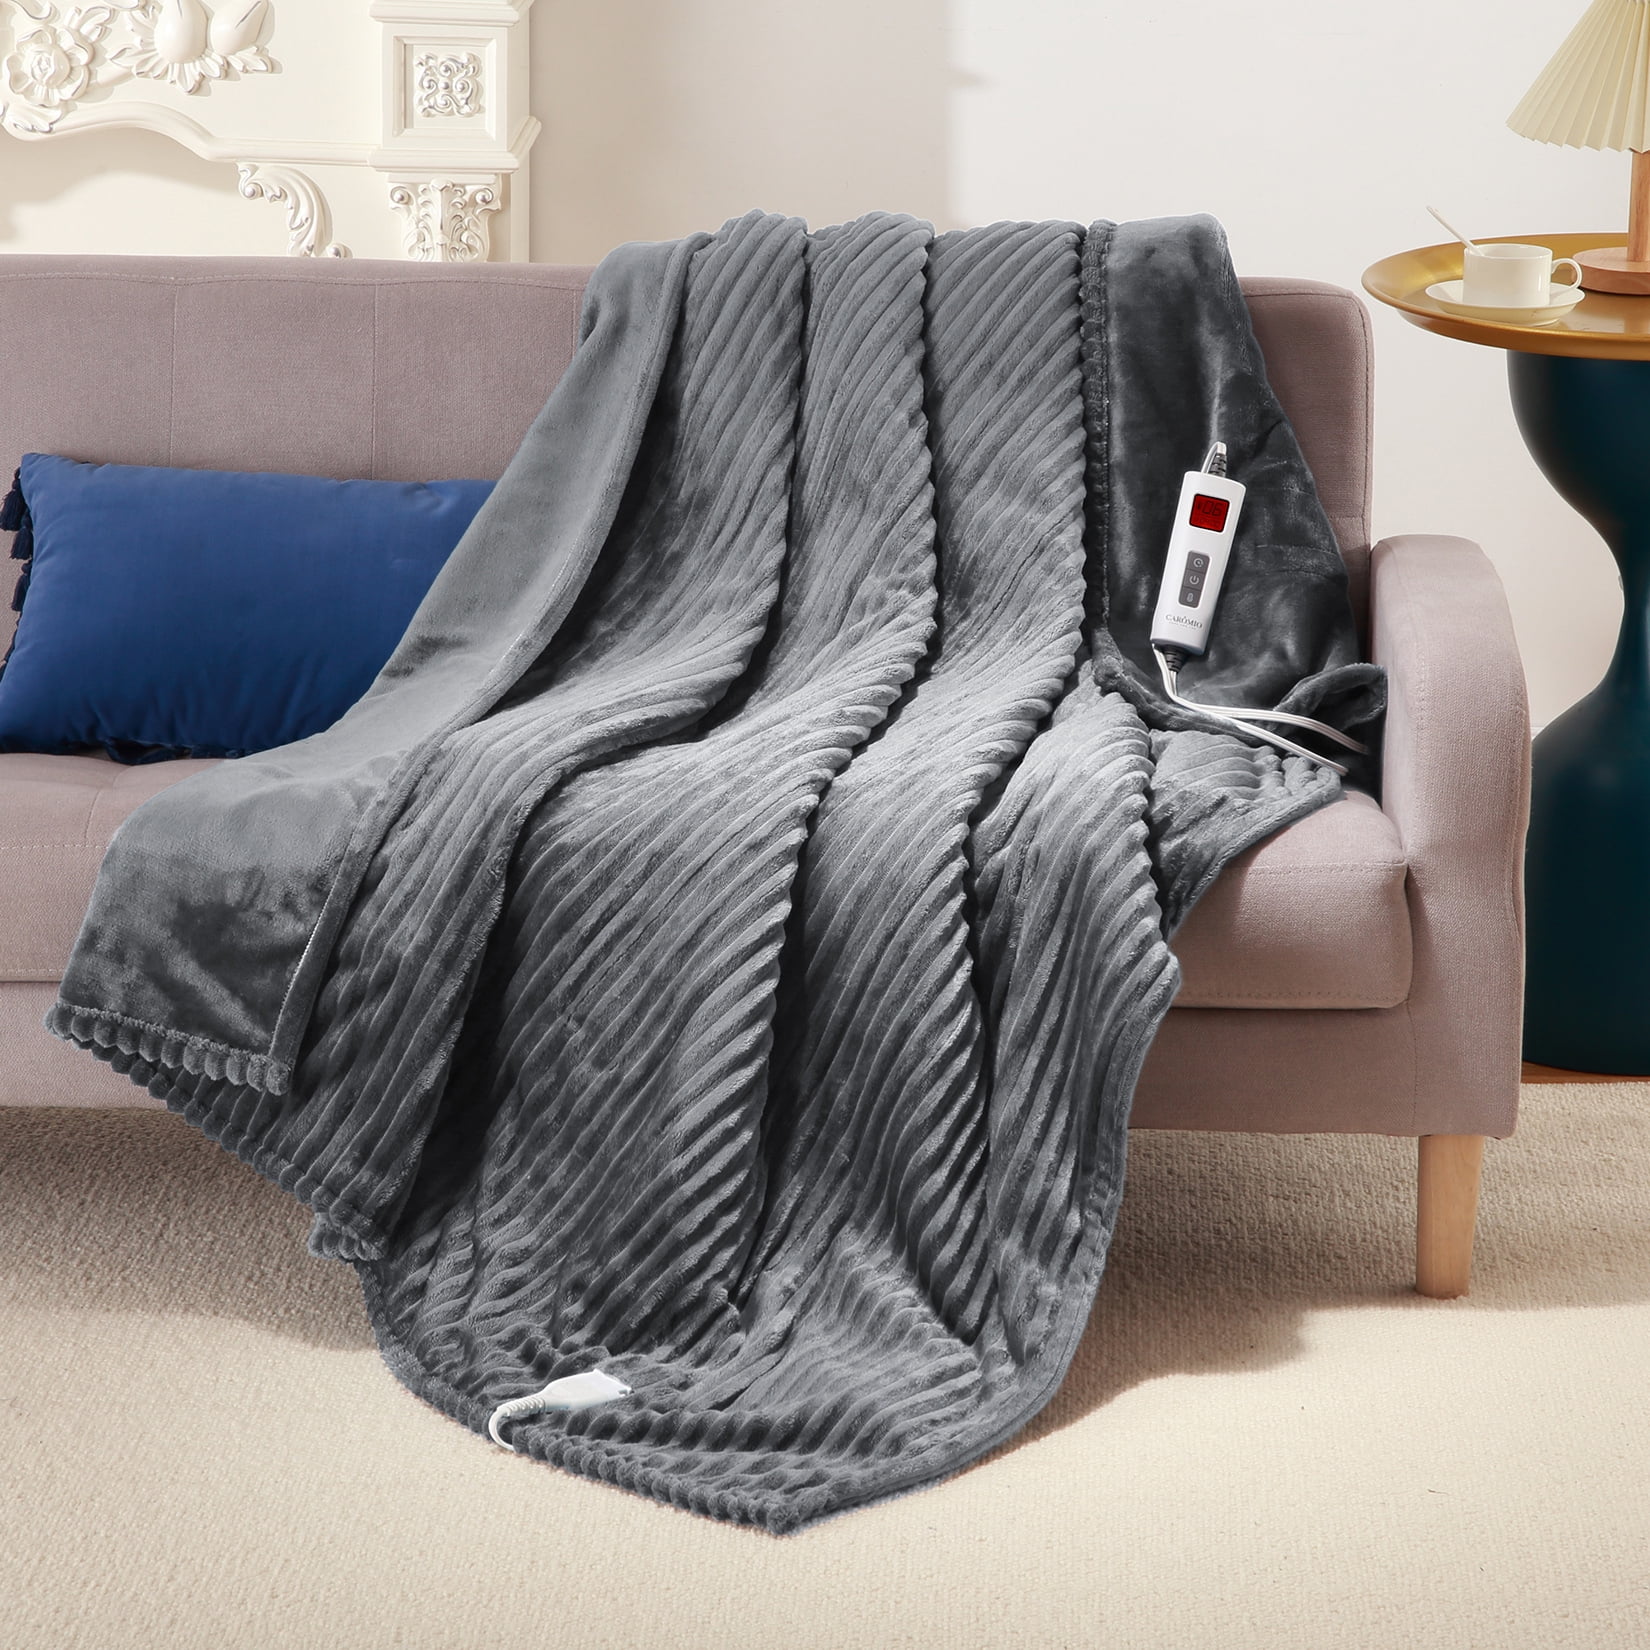 iTeknic Full Size Heated Blanket, 72x 84 Electric Blanket Fast